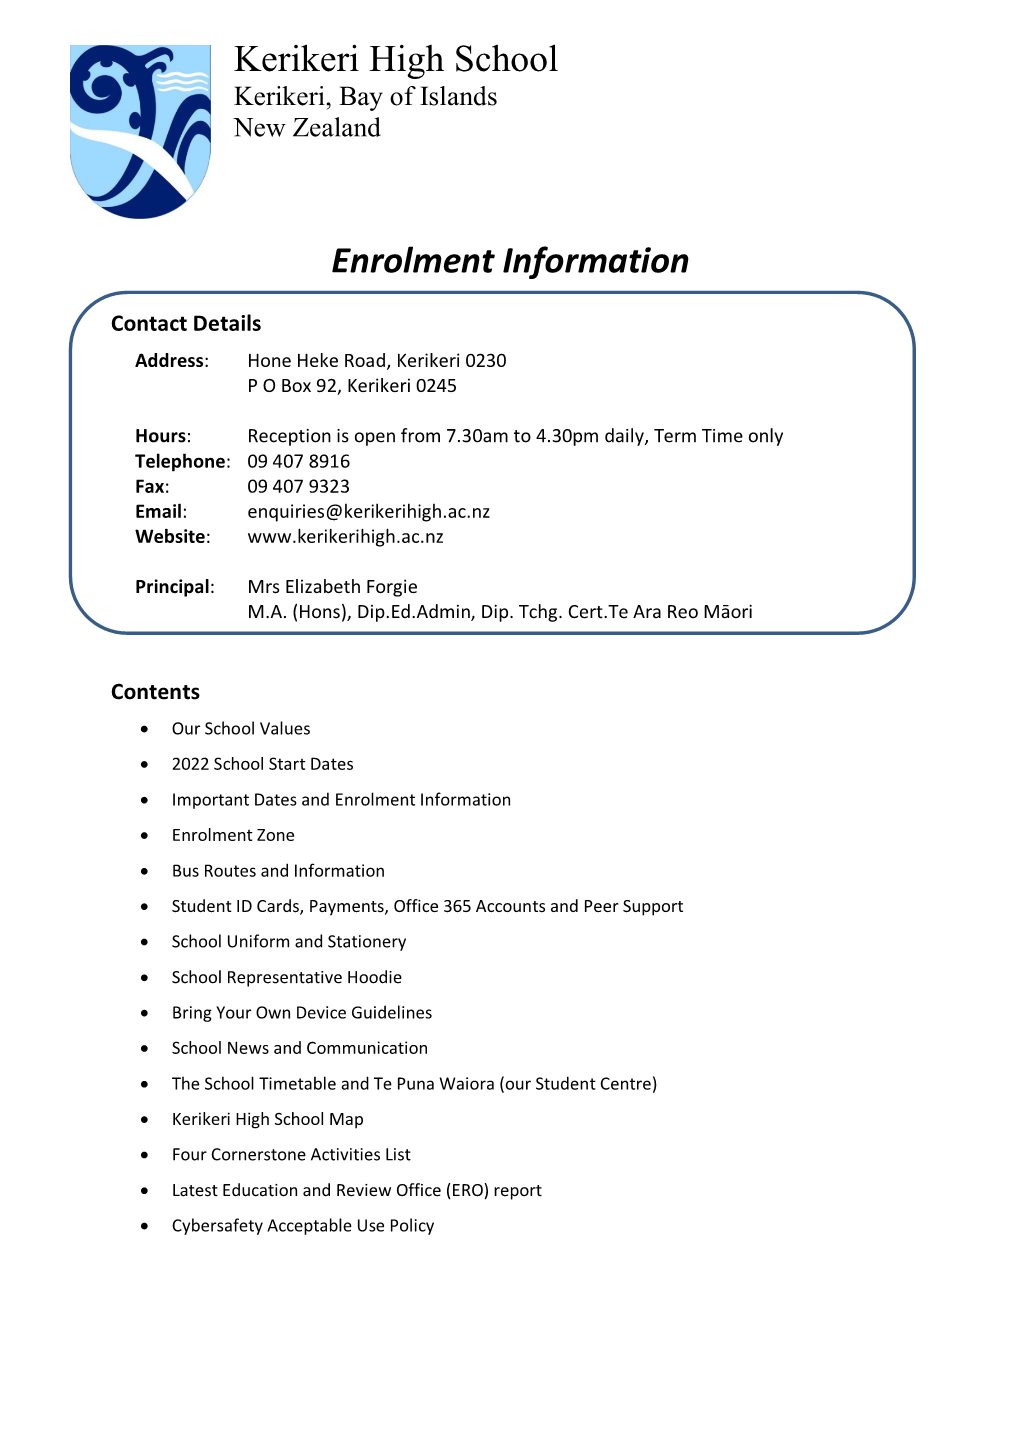 Kerikeri High School Enrolment Information